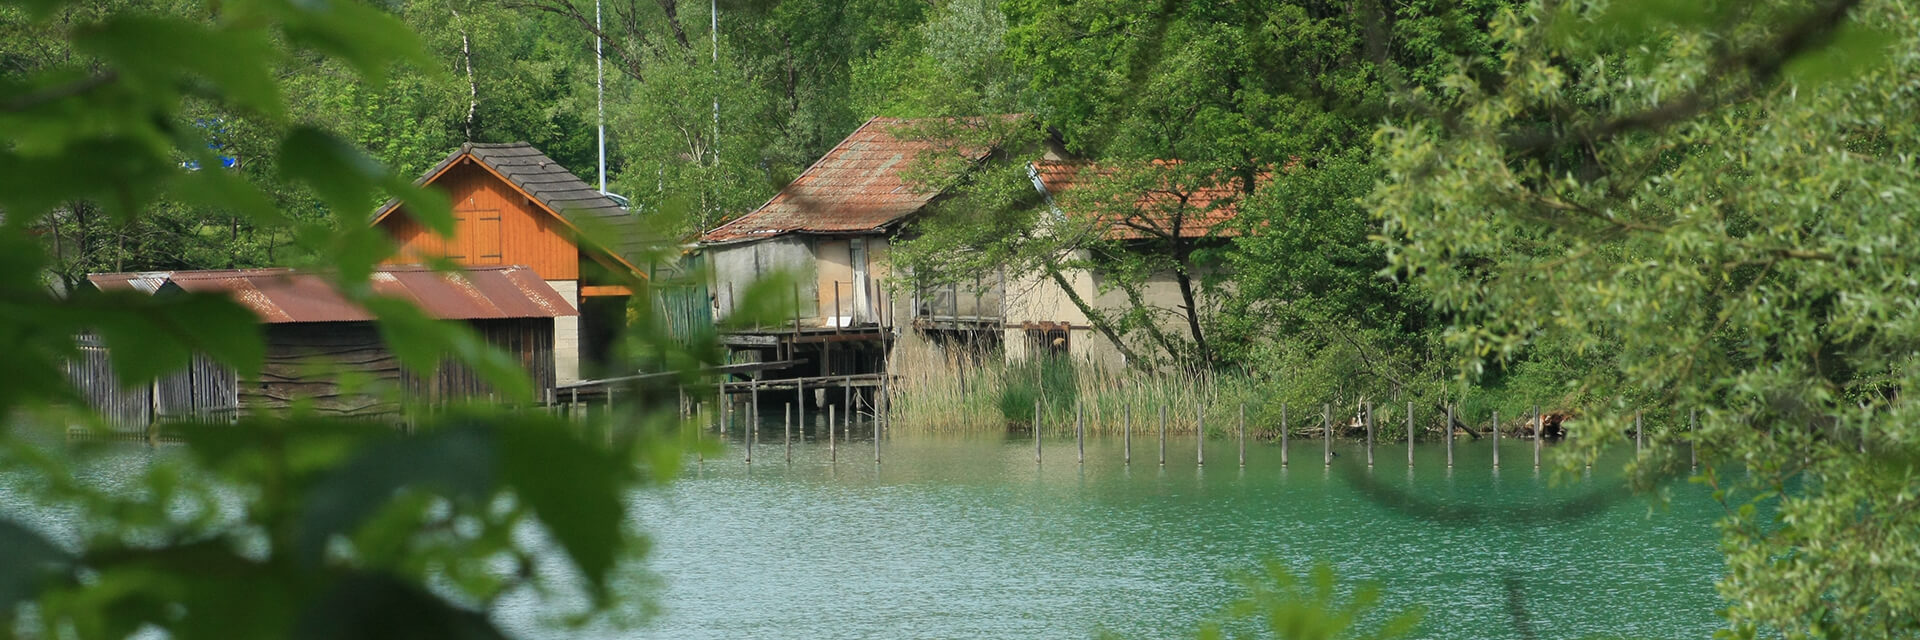 The traditional Savoyard boathouses